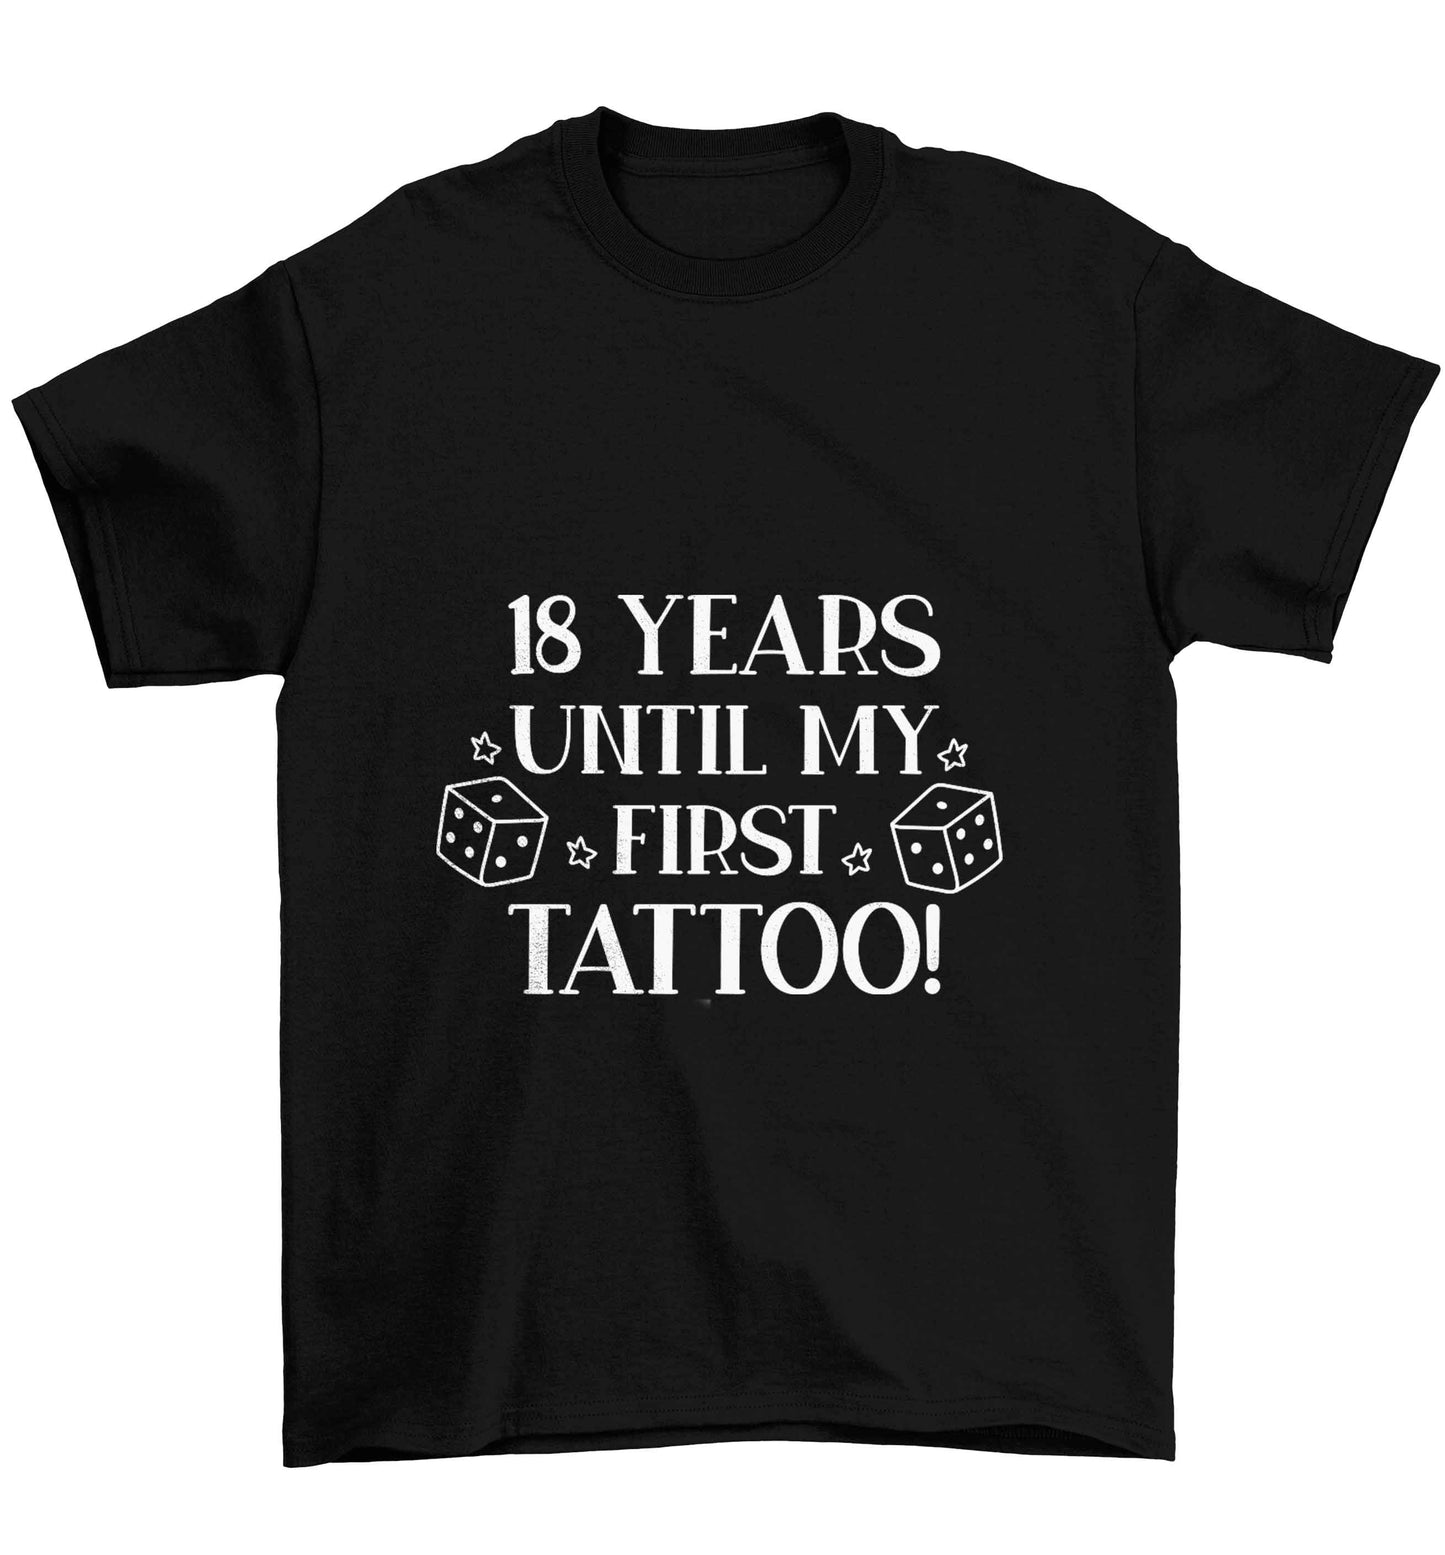 18 Years Until my First Tattoo Children's black Tshirt 12-13 Years